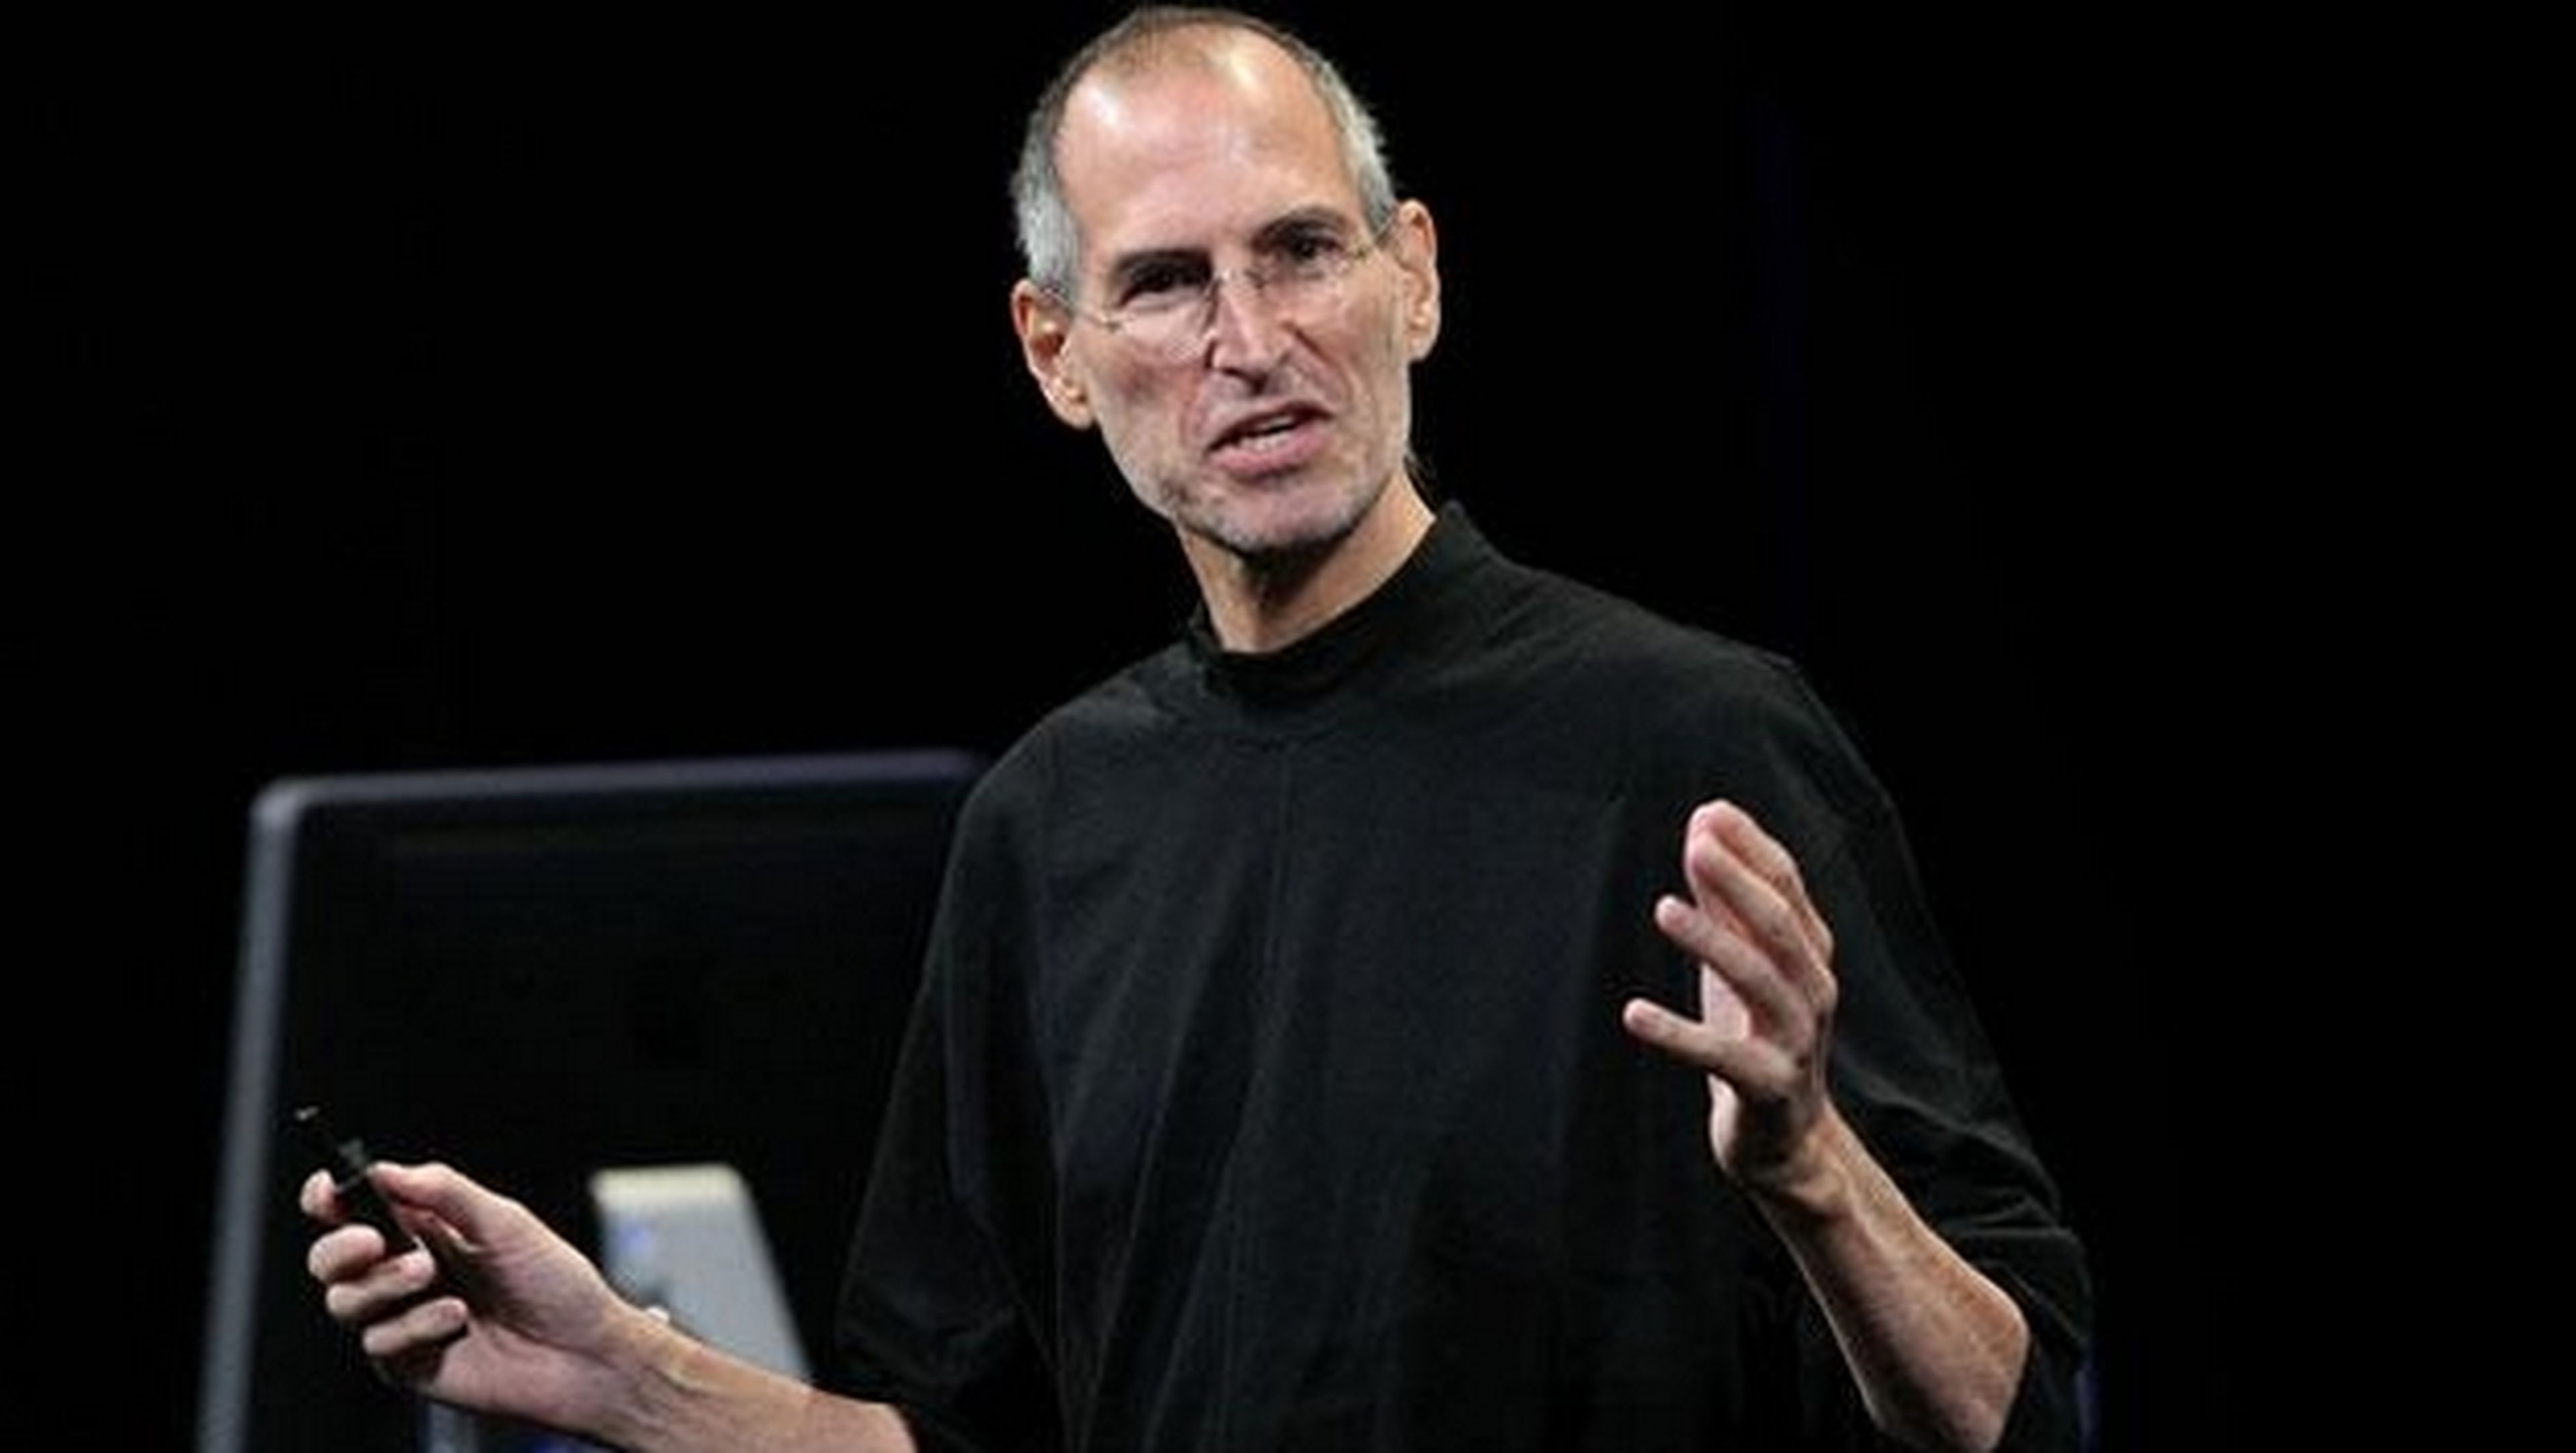 Accionistas de Apple denuncian a Steve Jobs y Tim Cook por pactar ilegalmente con Google e Intel para no quitarse empleados.